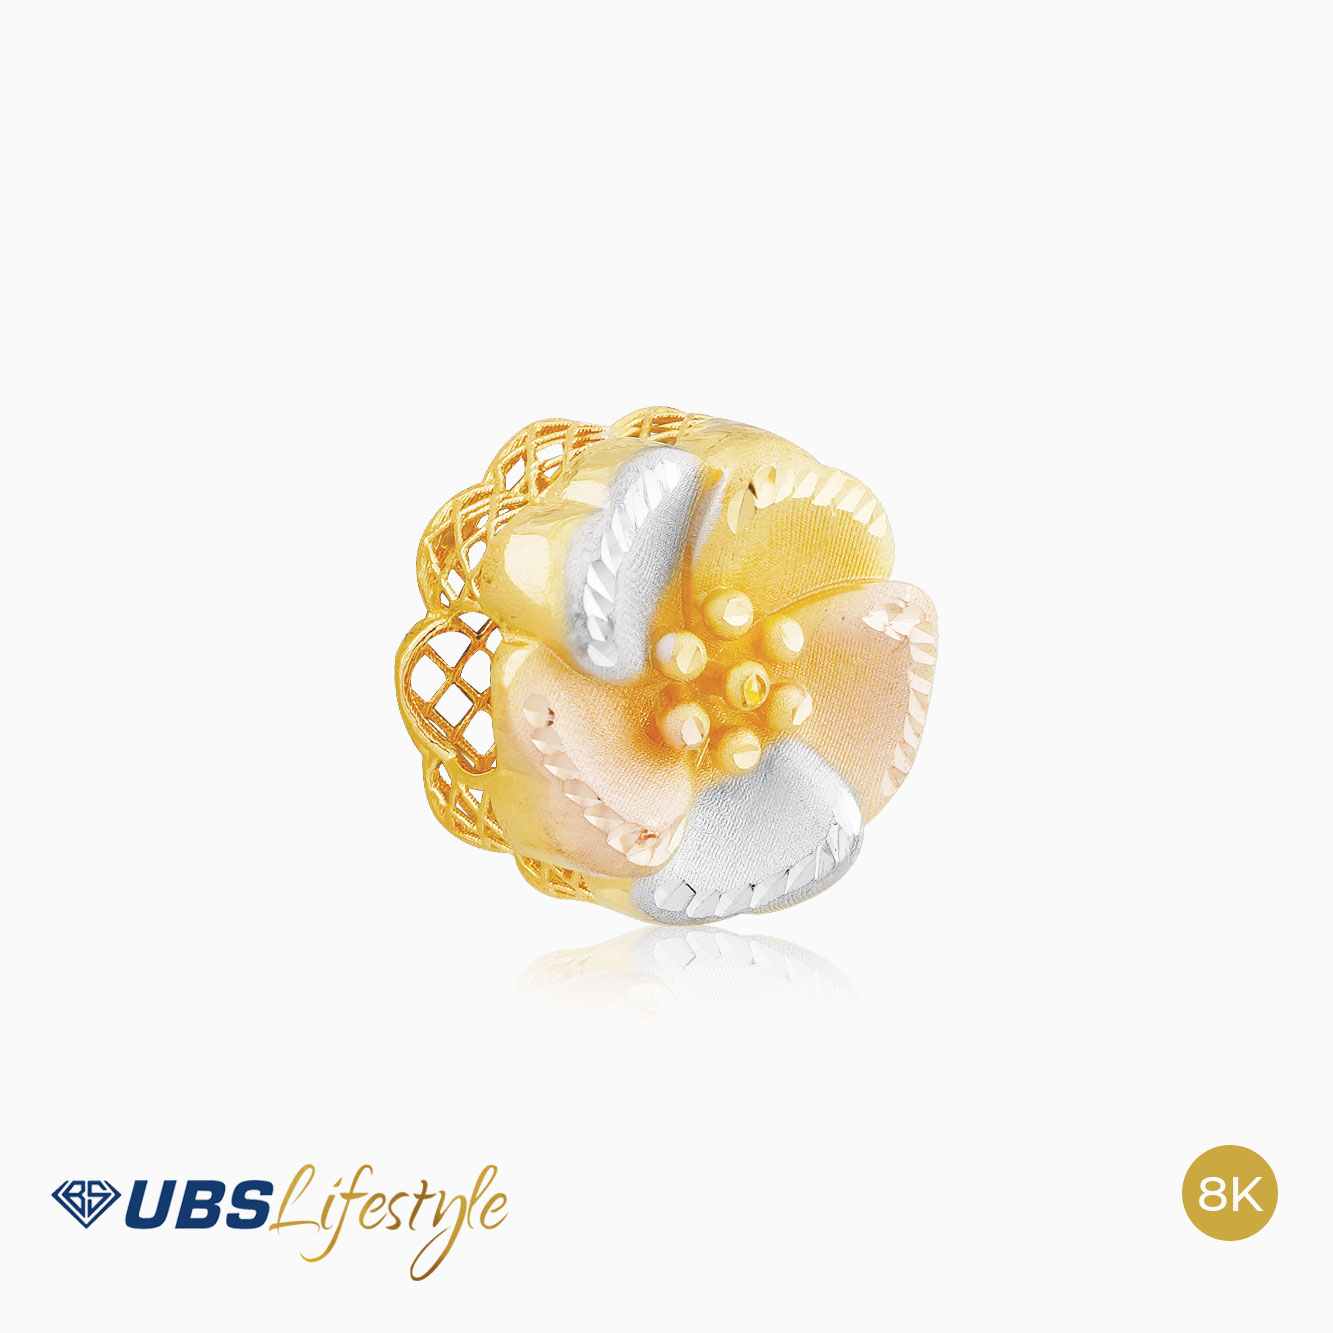 UBS Liontin Emas Sakura - Cdm0113 - 8K